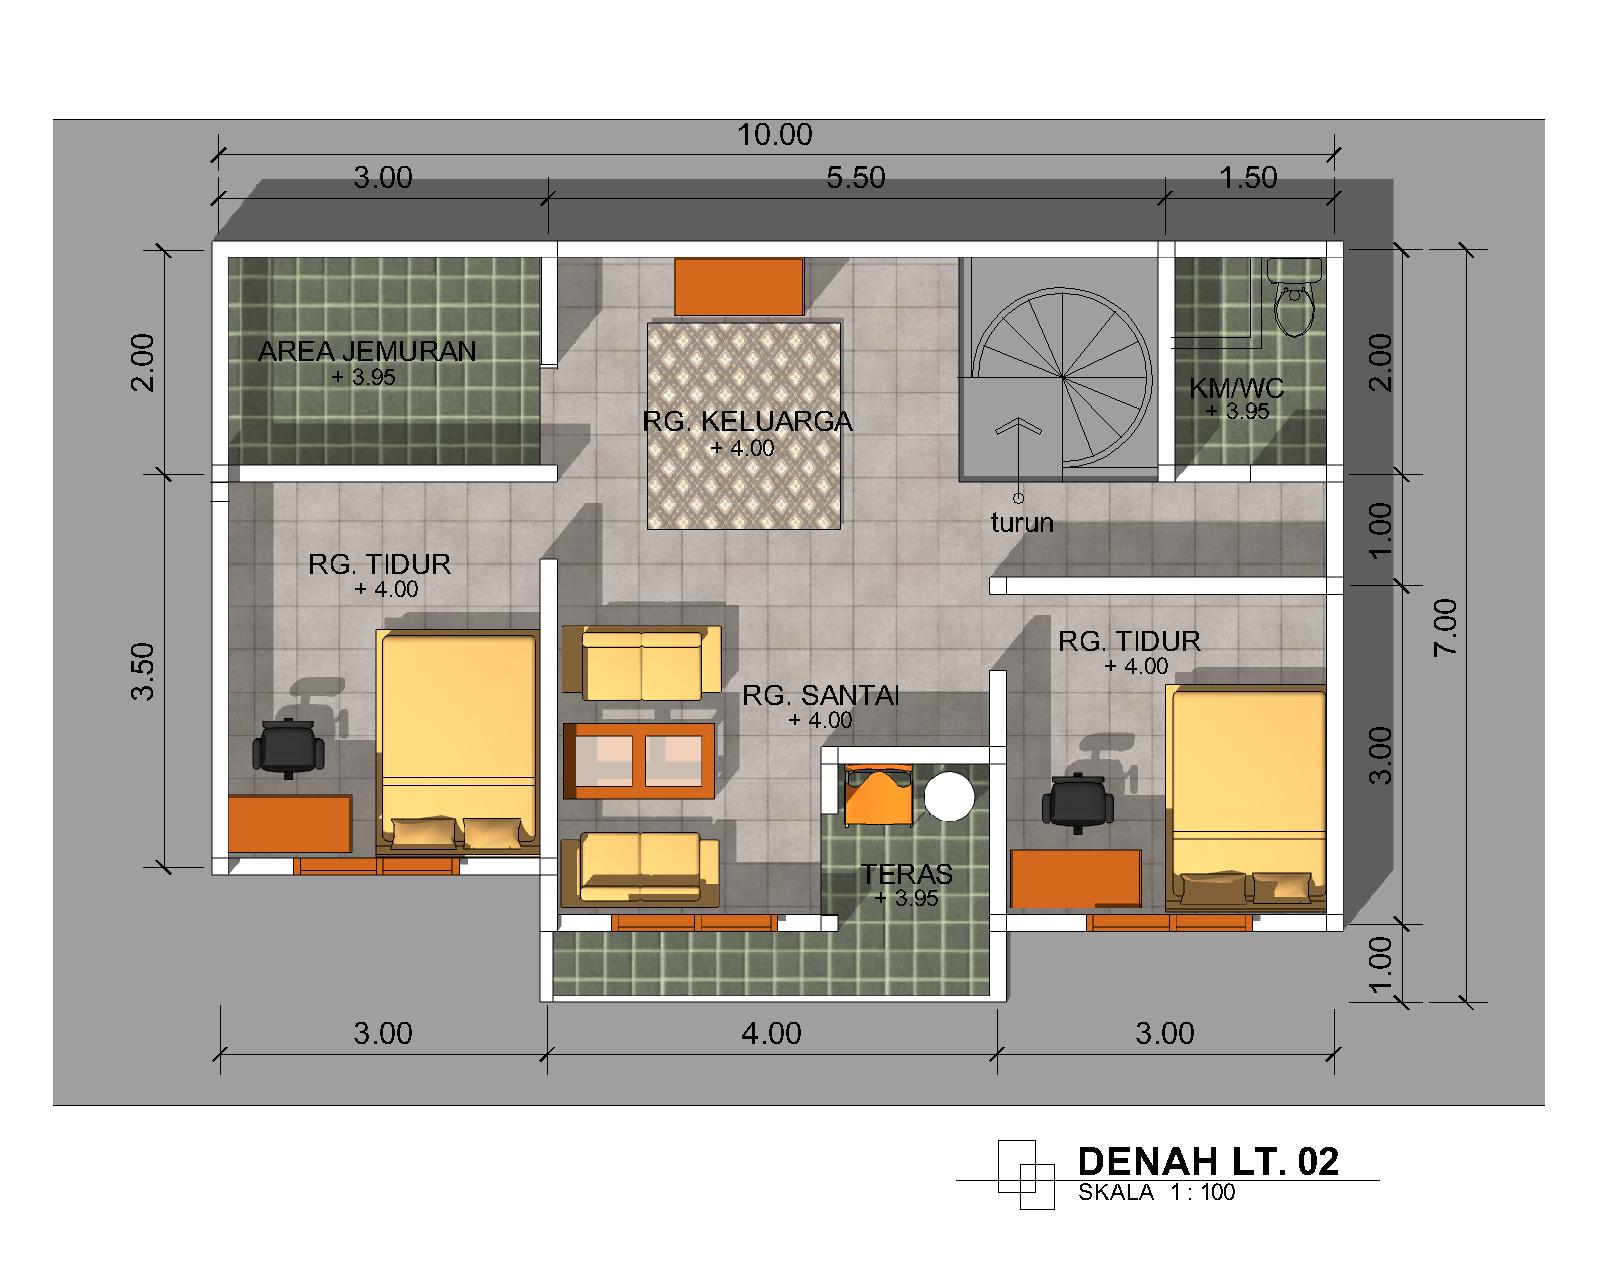 Kumpulan Desain Rumah Minimalis Ukuran 6x8 Kumpulan Desain Rumah